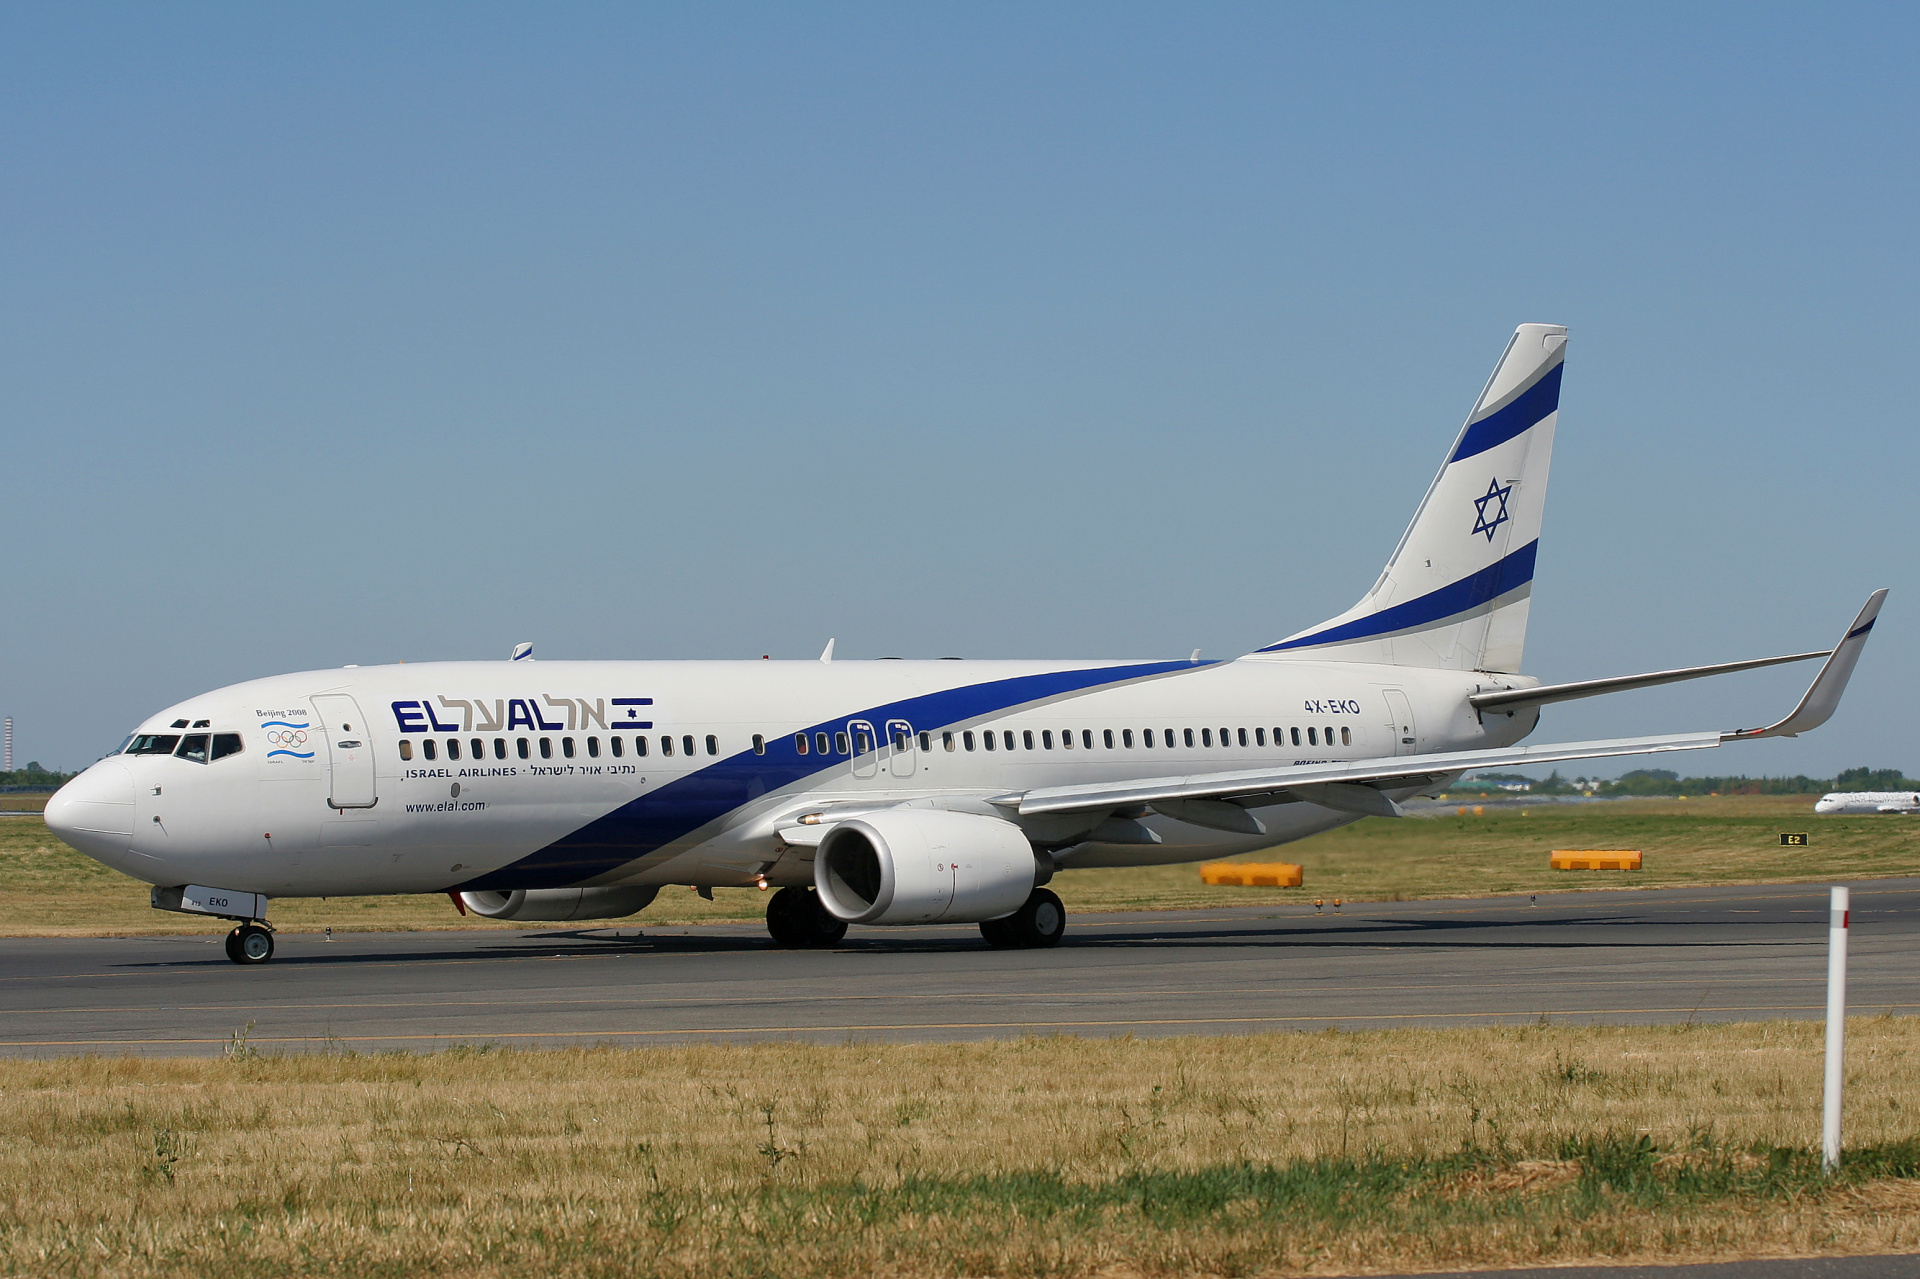 4X-EKO (Beijing 2008 Olympic Games sticker) (Aircraft » EPWA Spotting » Boeing 737-800 » El Al Israel Airlines)